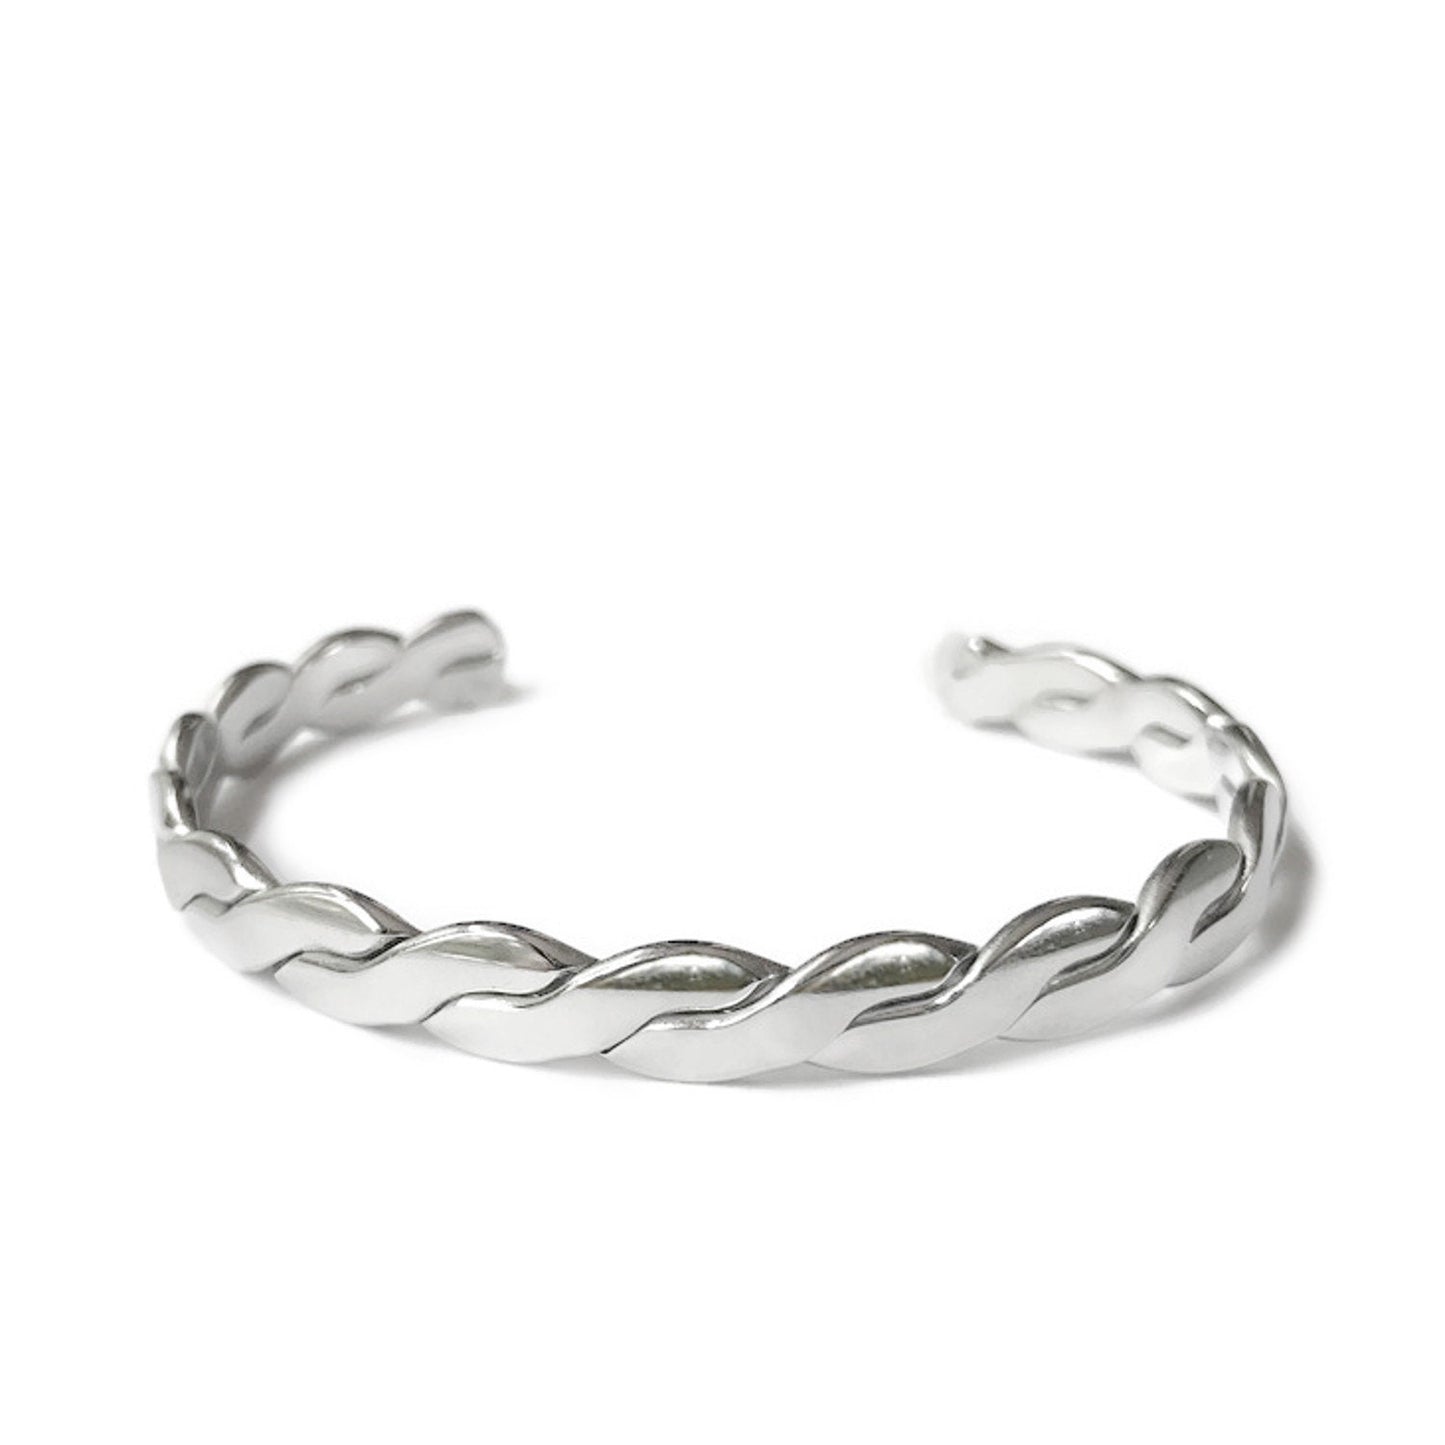 Silver Twist Cuff Bracelet, Stainless Steel Jewelry, Flat Rope Braid Bangle, Adjustable Metal Bracelet, Birthday Gift for Wife